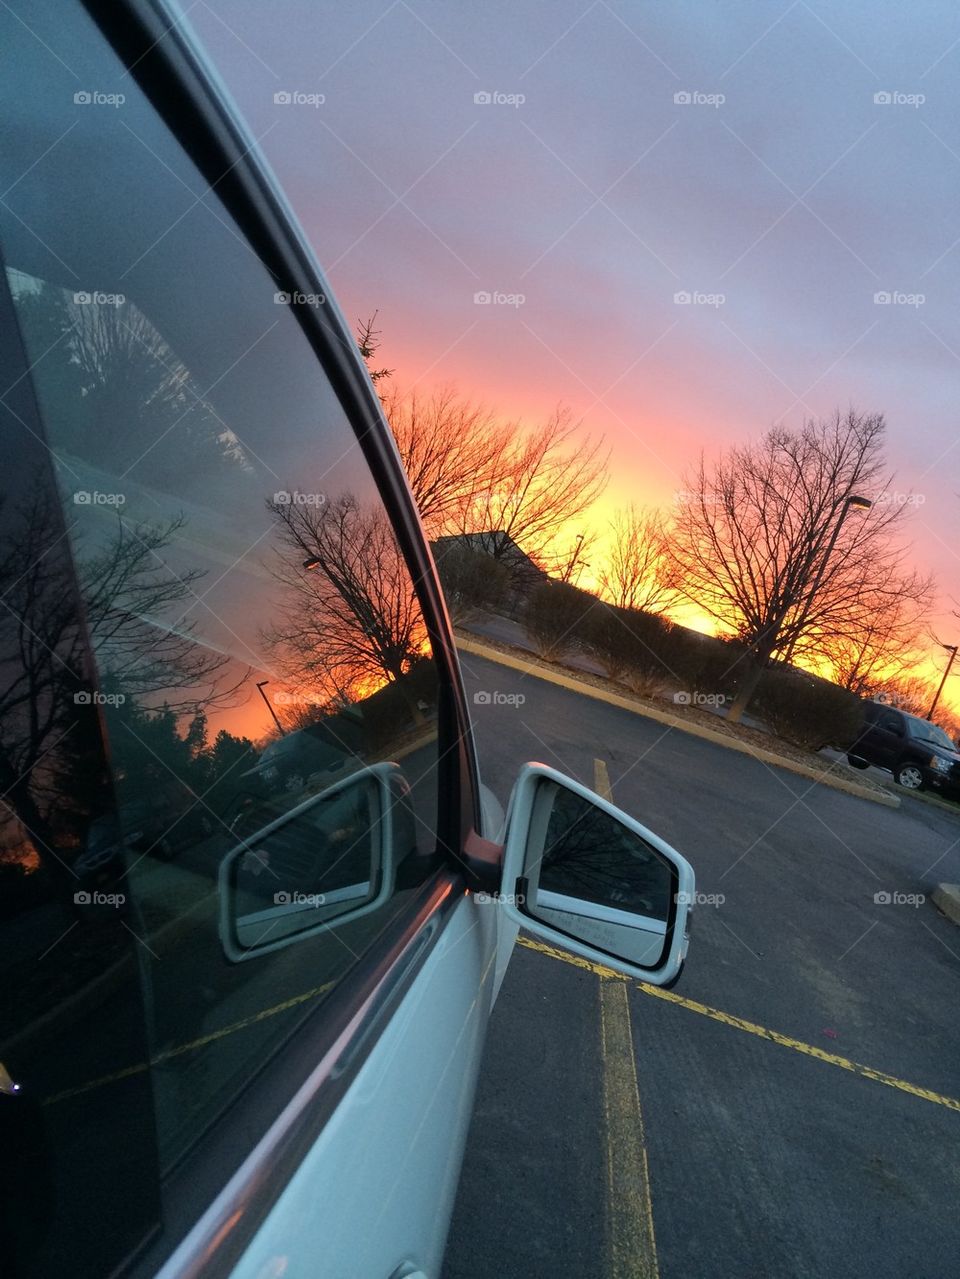 Reflection of sunset